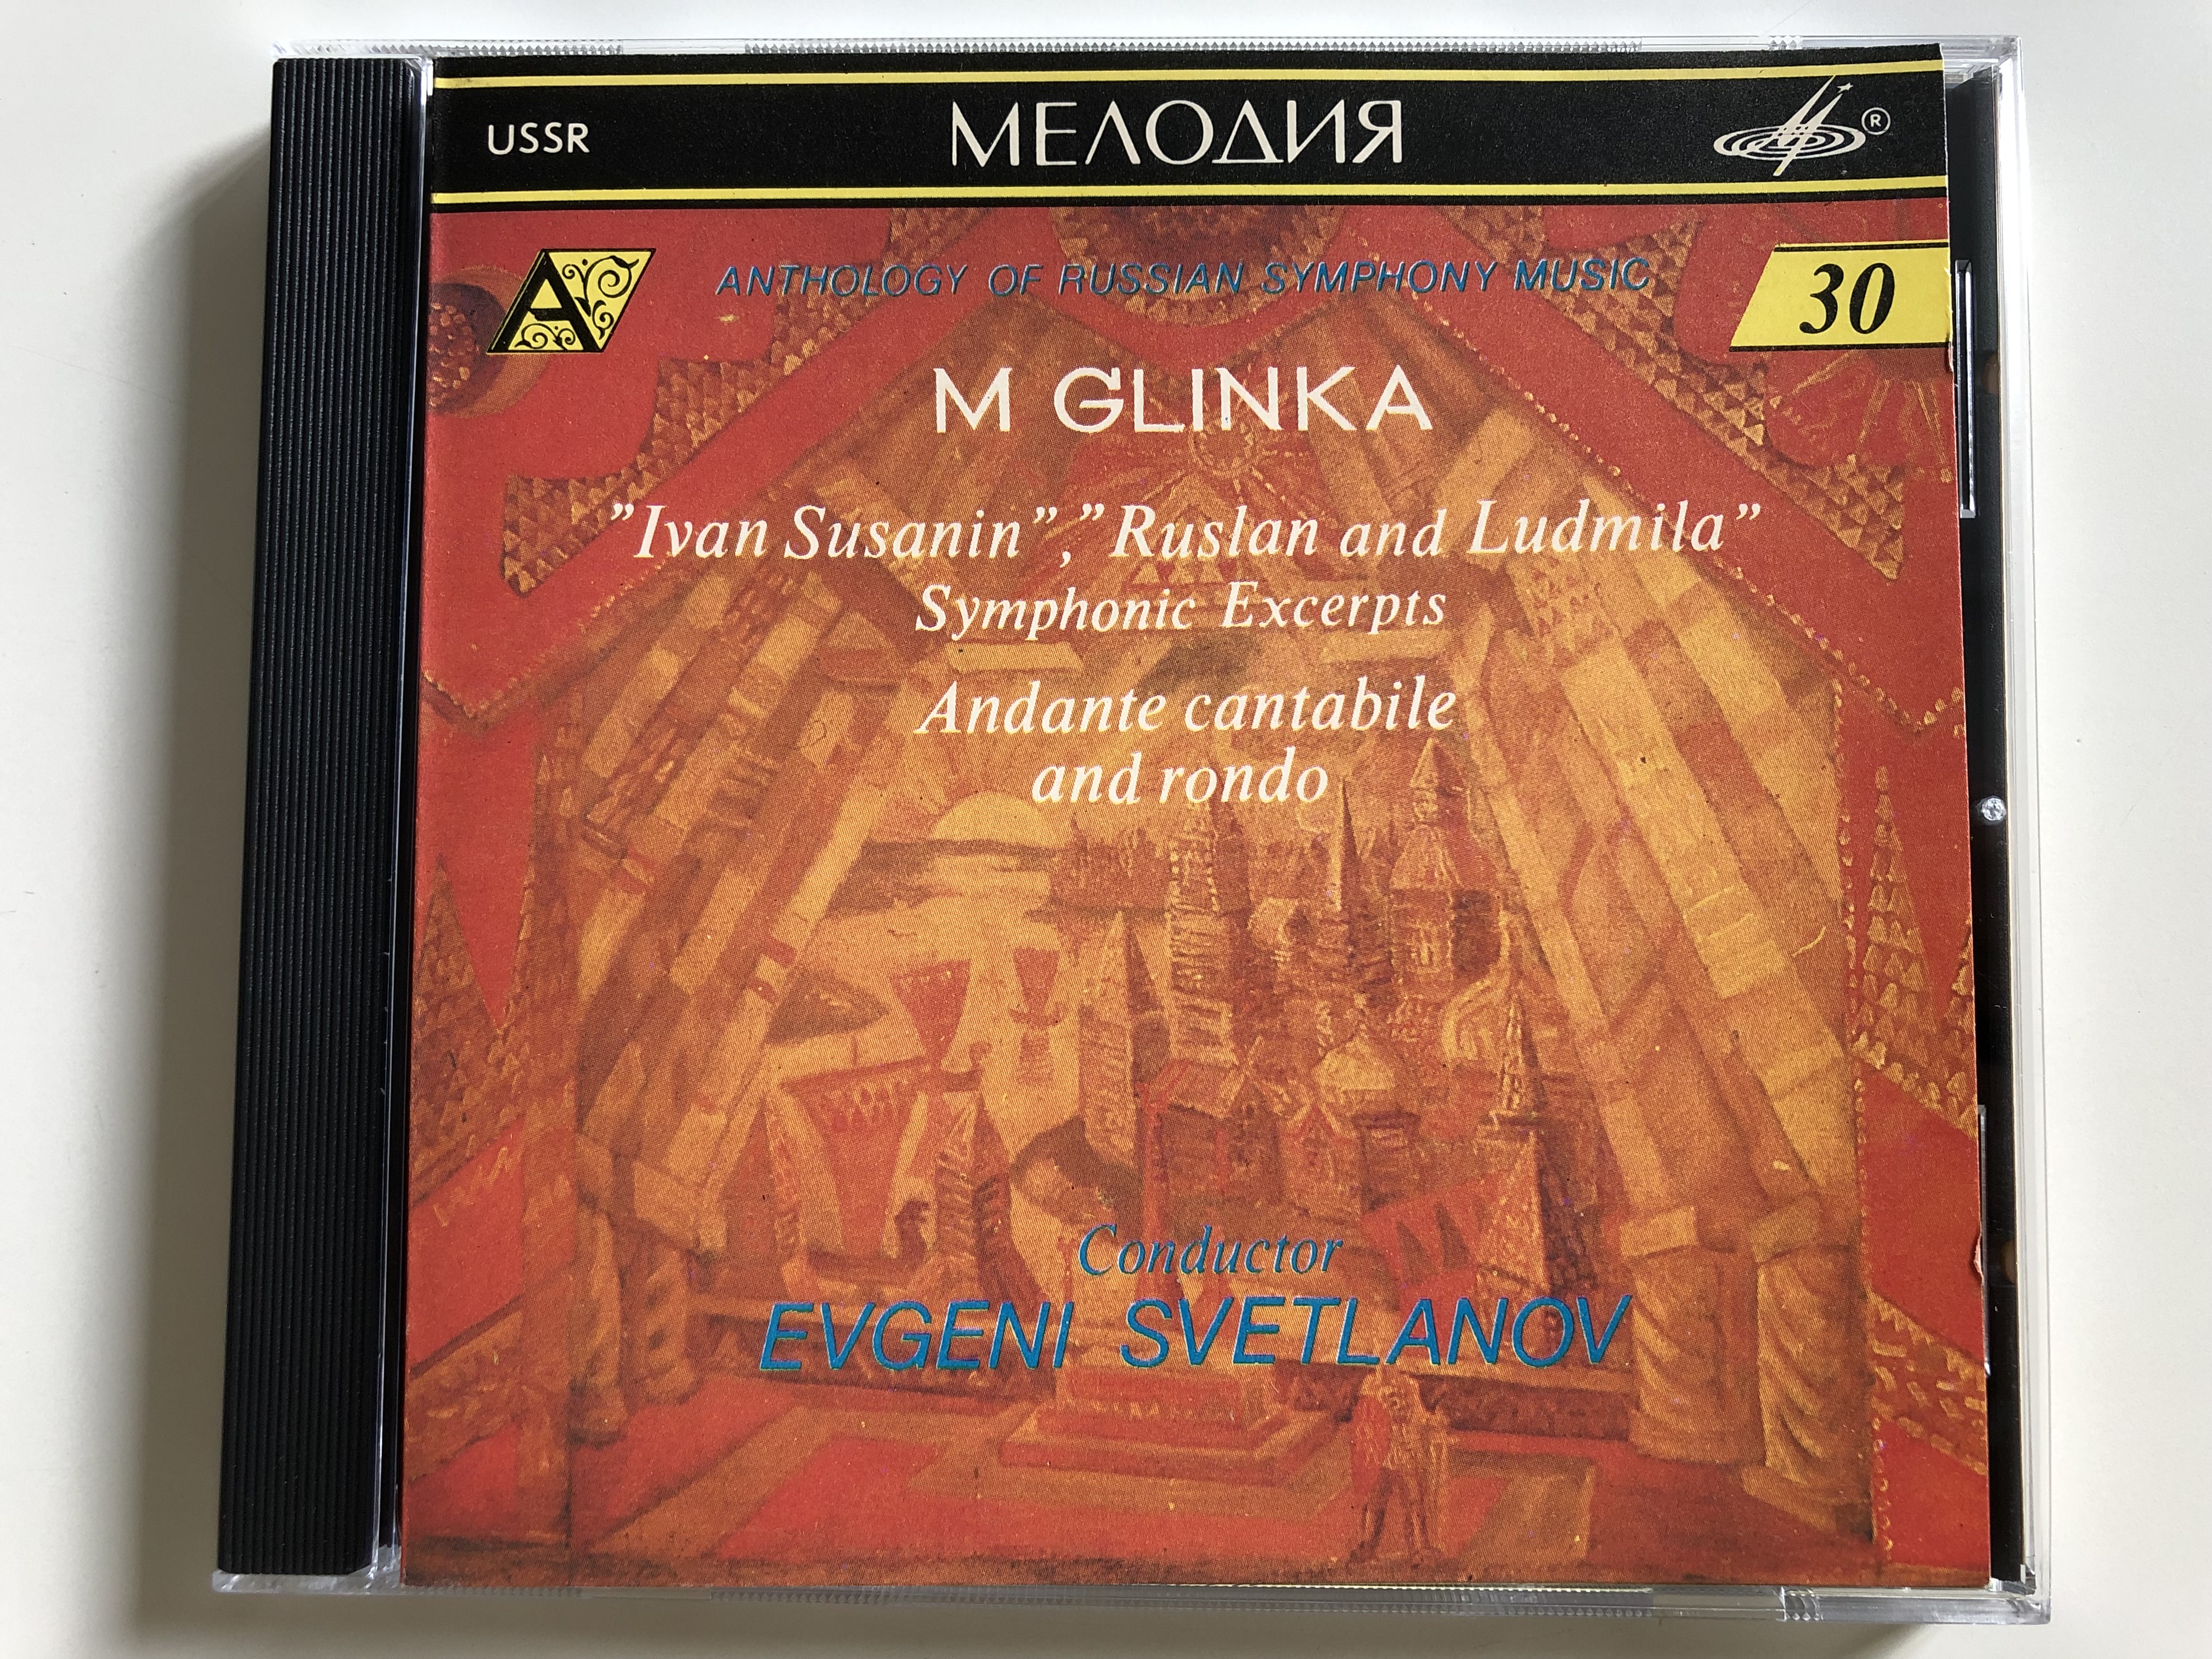 m.-glinka-ivan-susanin-ruslan-and-ludmila-symphonic-excerpts-andante-cantabile-and-rondo-conductor-evgeni-svetlanov-antholohy-of-russian-symphony-music-30-melodiya-audio-cd-1991-1-.jpg